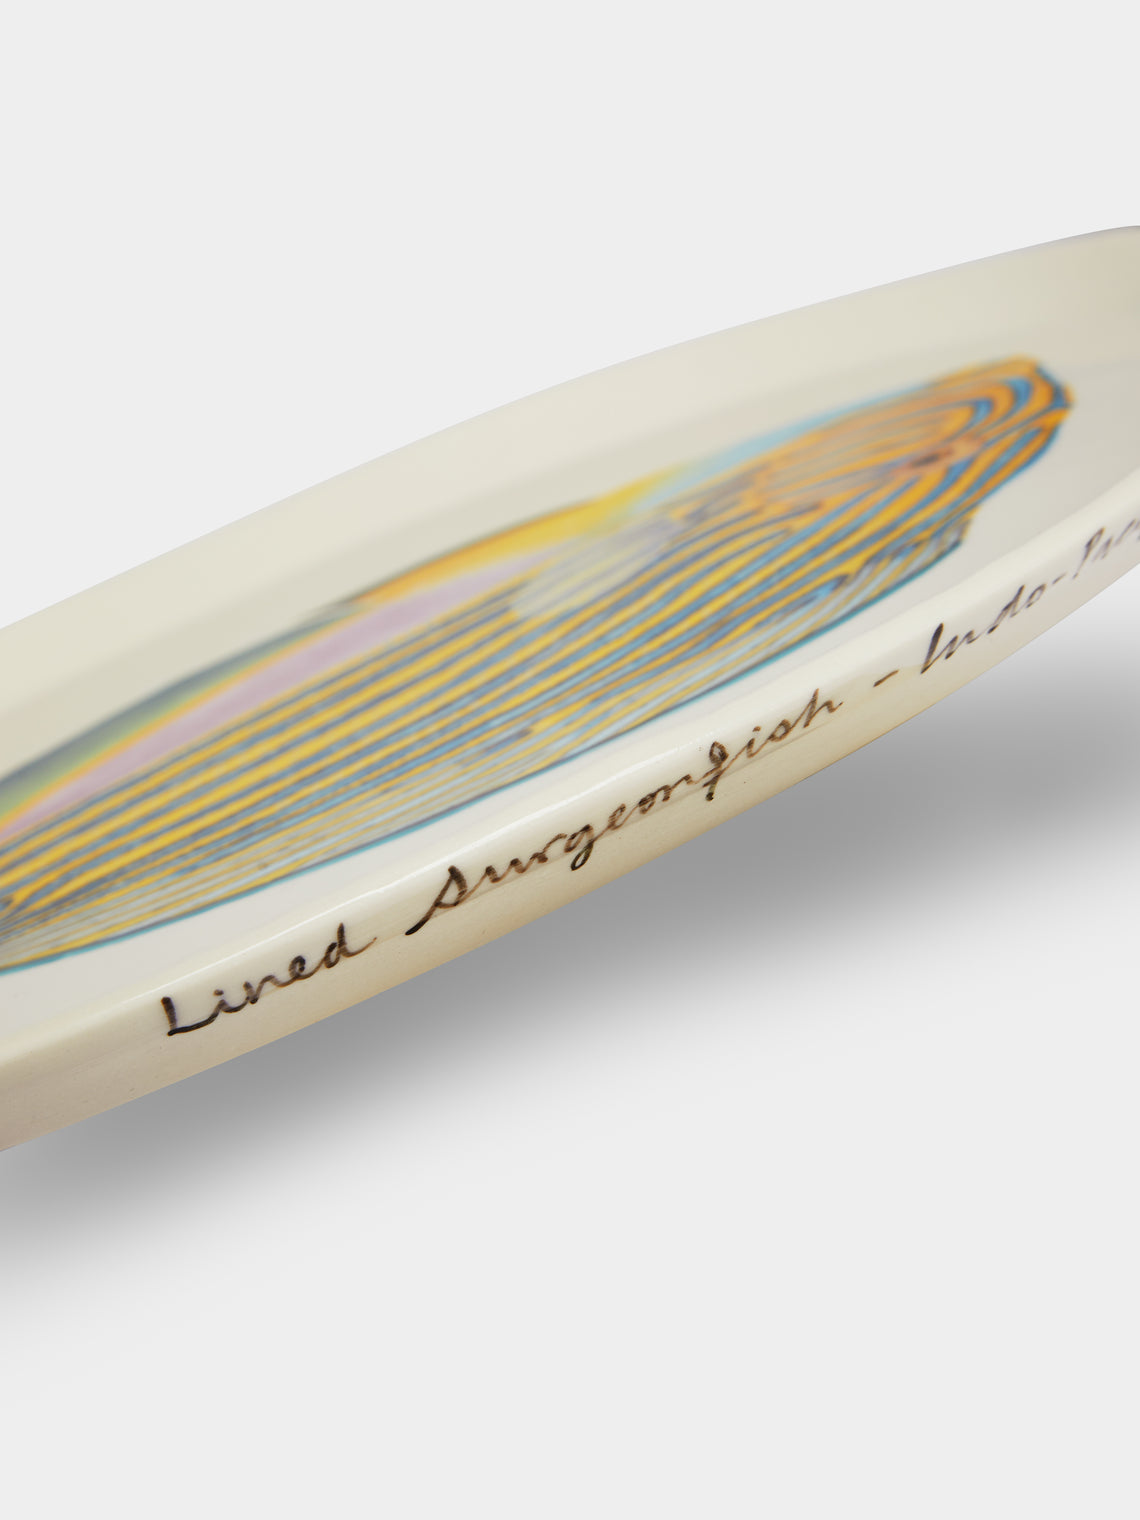 Casa Adams - Striped Surgeonfish Hand-Painted Porcelain Serving Platter -  - ABASK